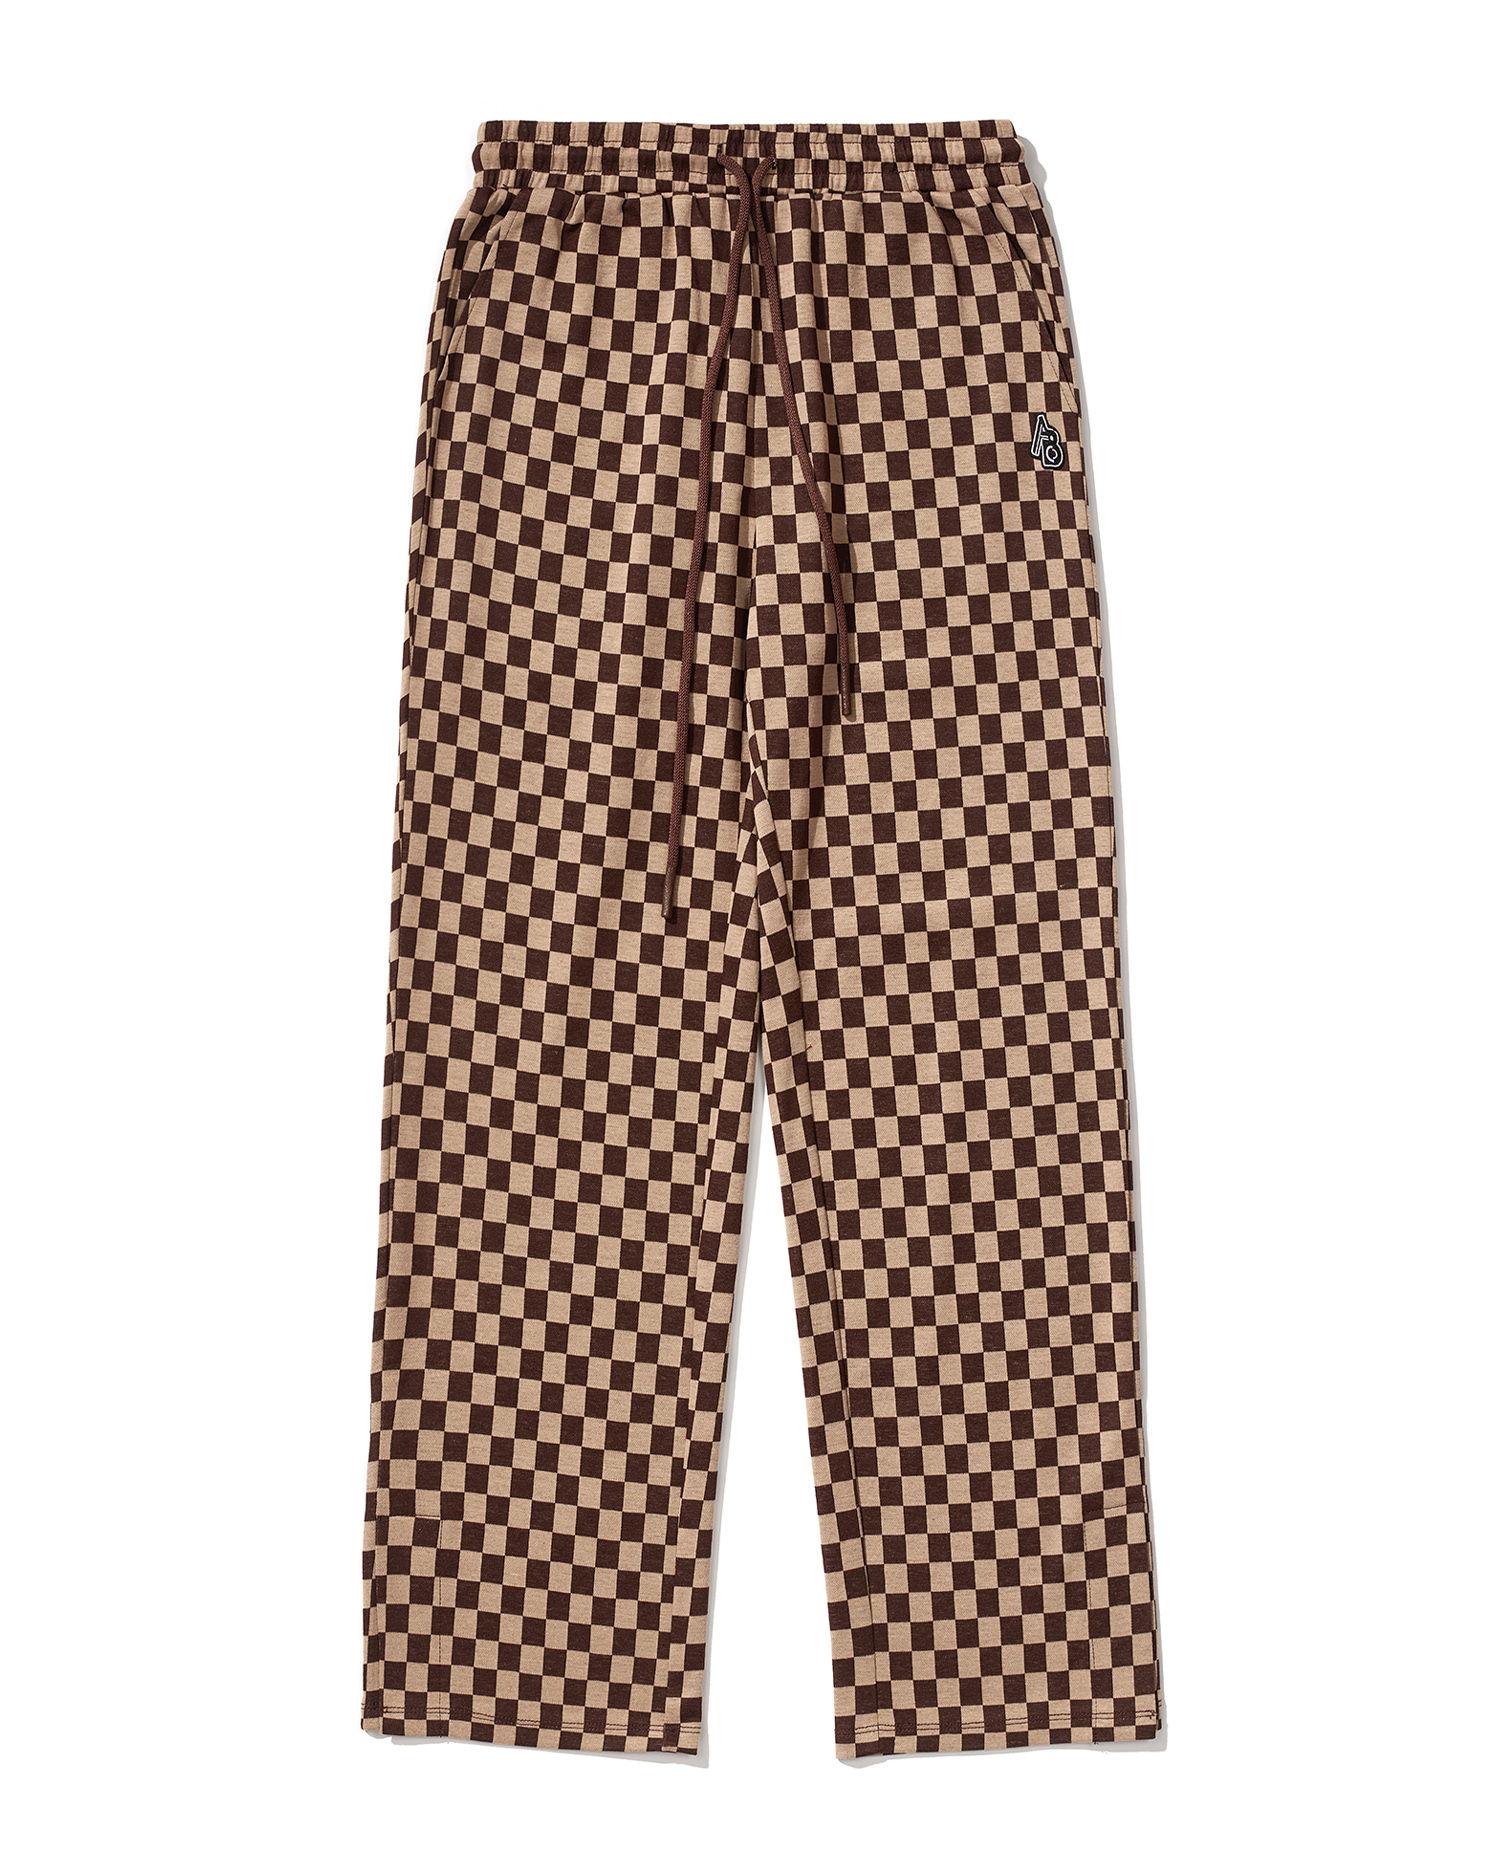 Checkered drawstring pants by CCAABB